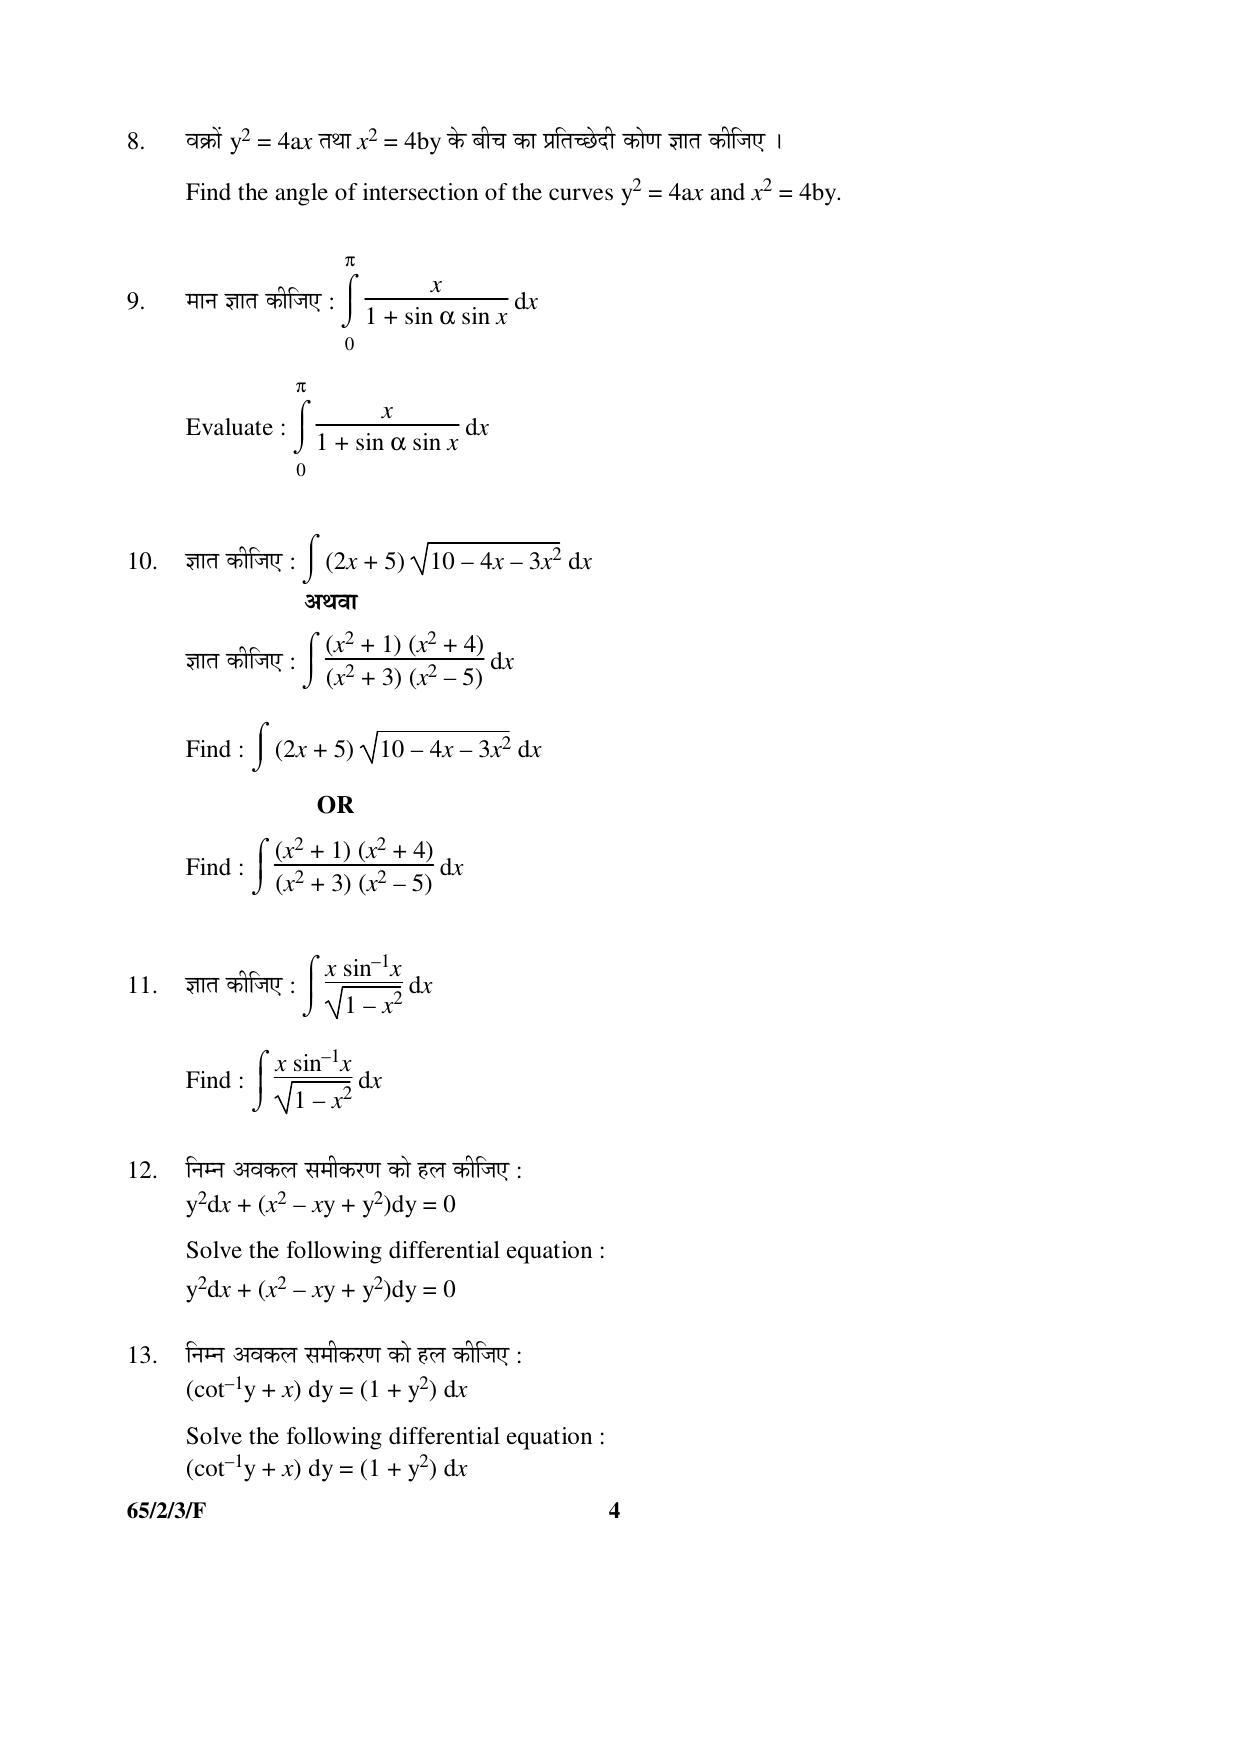 CBSE Class 12 65-2-3-F _Mathematics_ 2016 Question Paper - Page 4